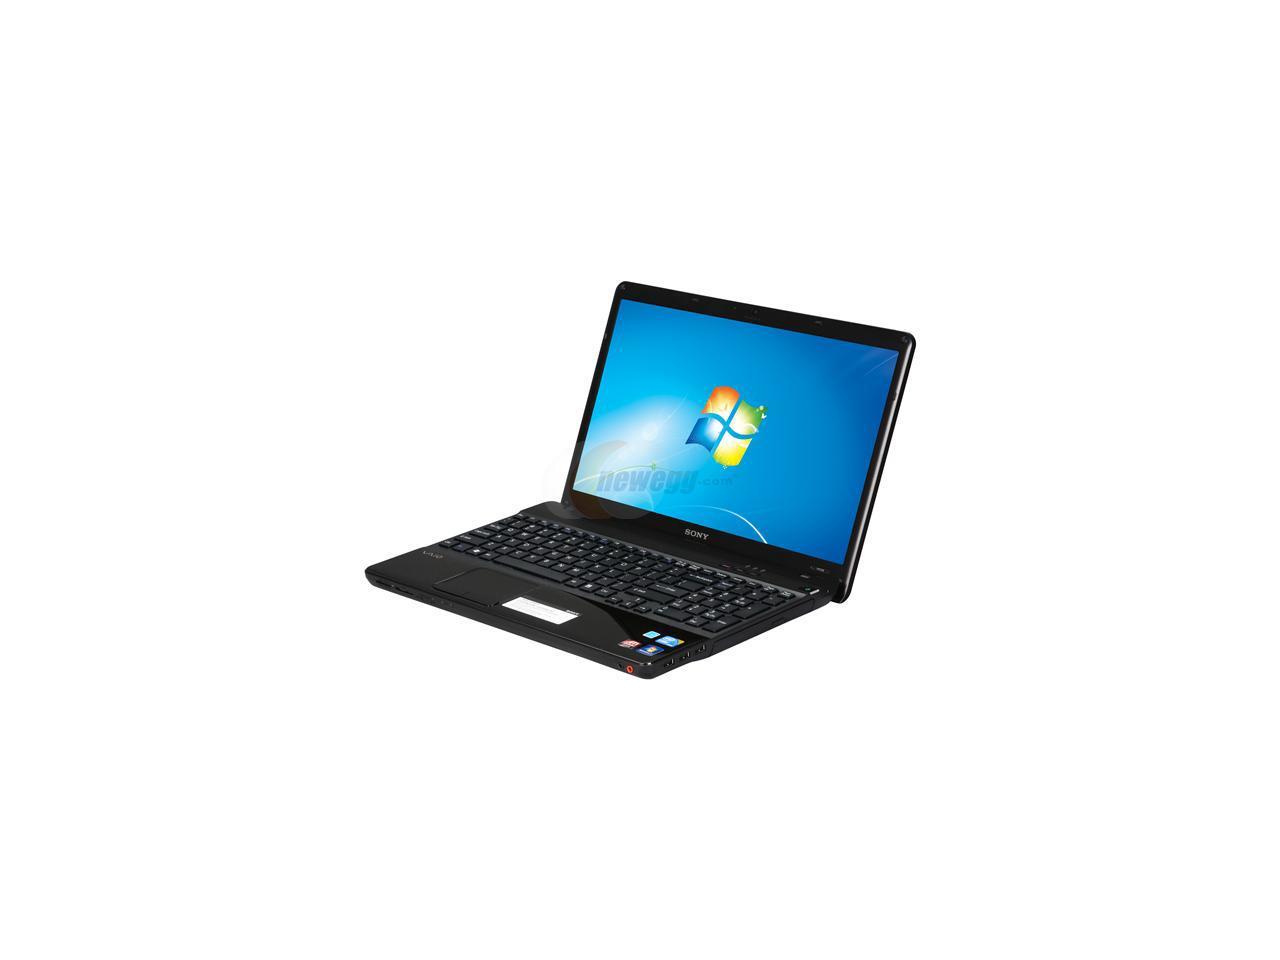 SONY Laptop VAIO E Series Intel Core i5 1st Gen 520M (2.40GHz) 4GB 